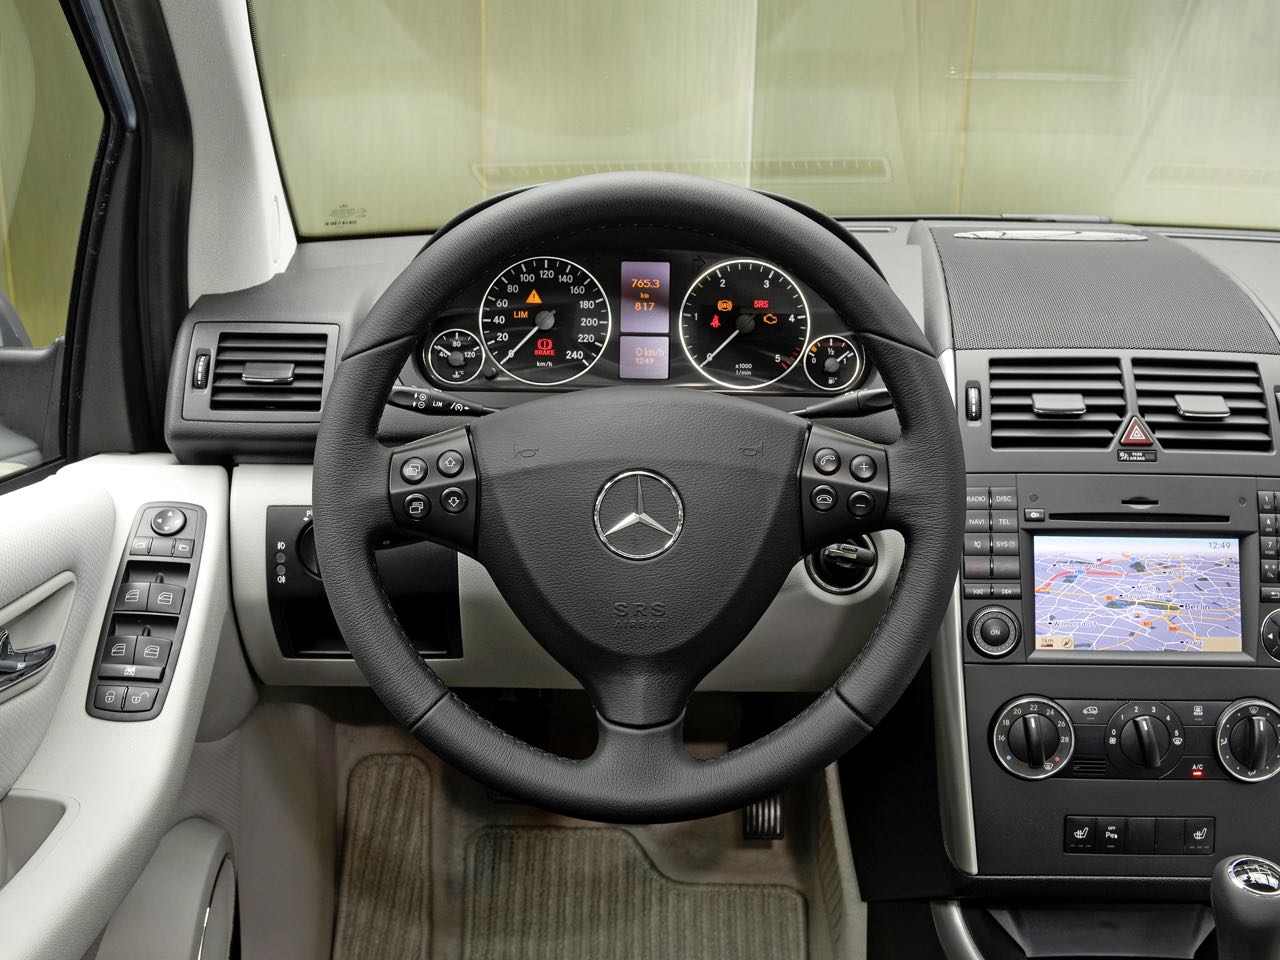 Mercedes Clase A 2008 (W169) interior